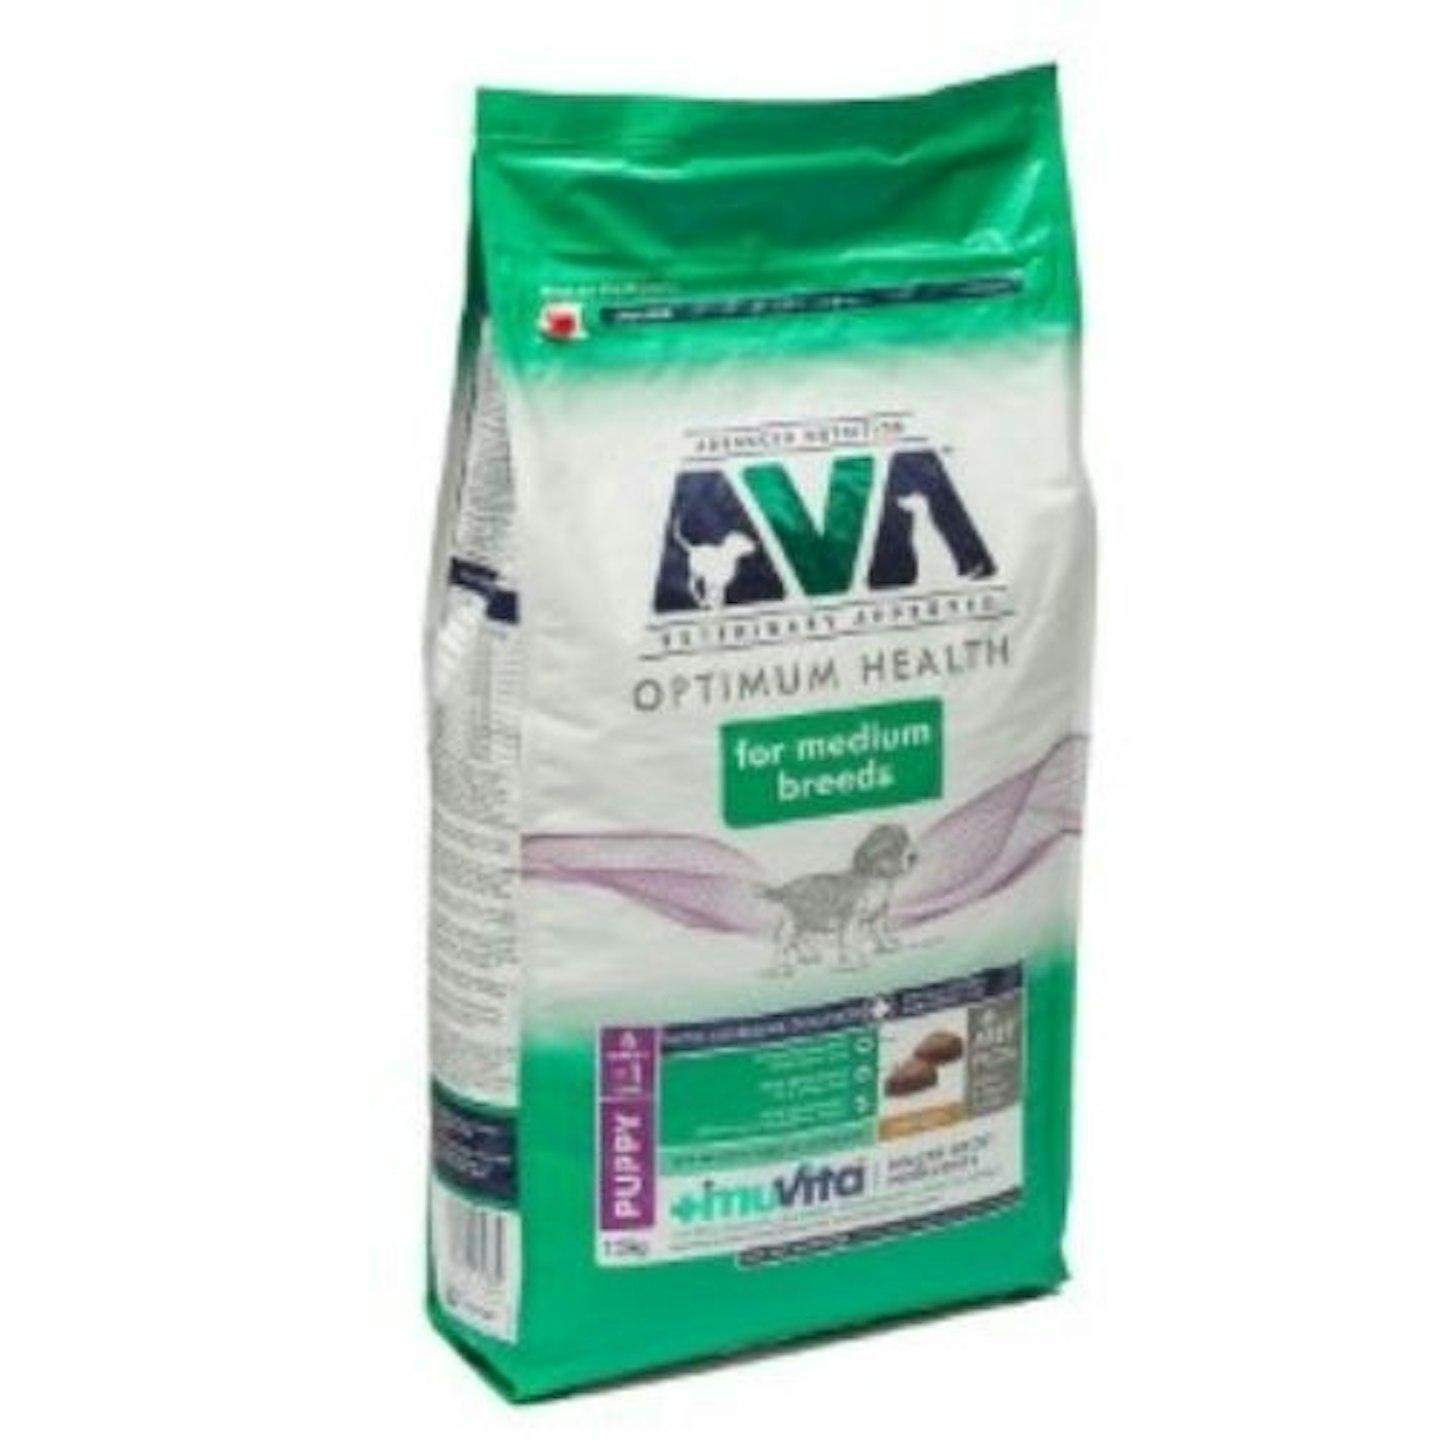 AVA Puppy Food bag